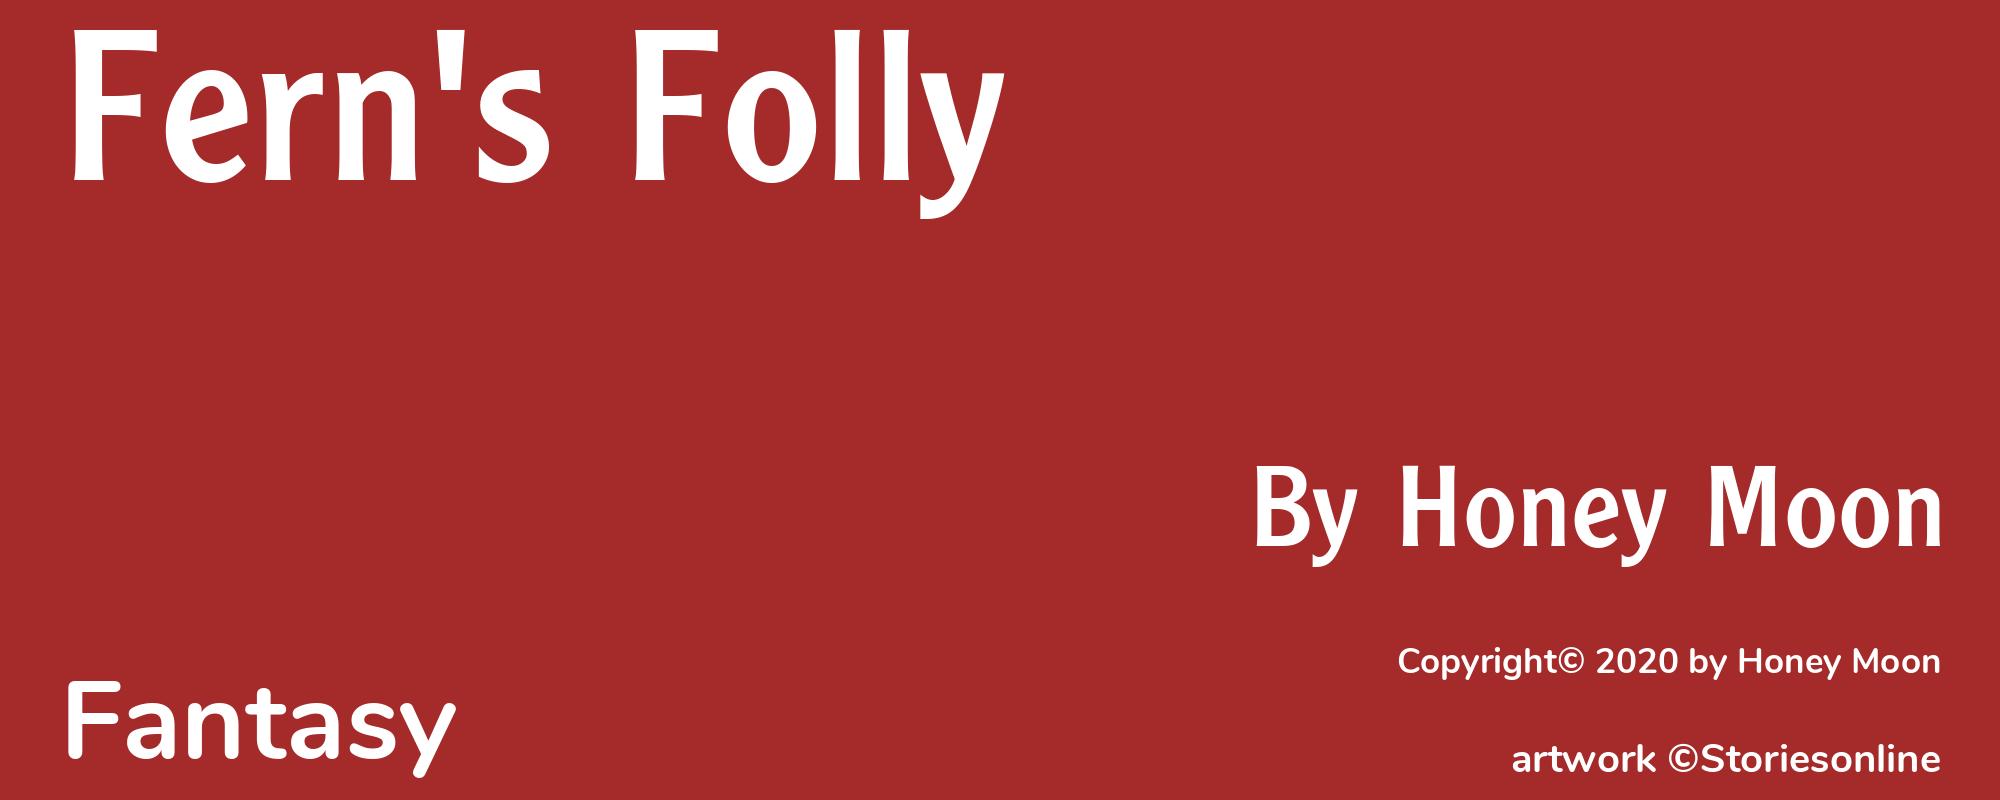 Fern's Folly - Cover